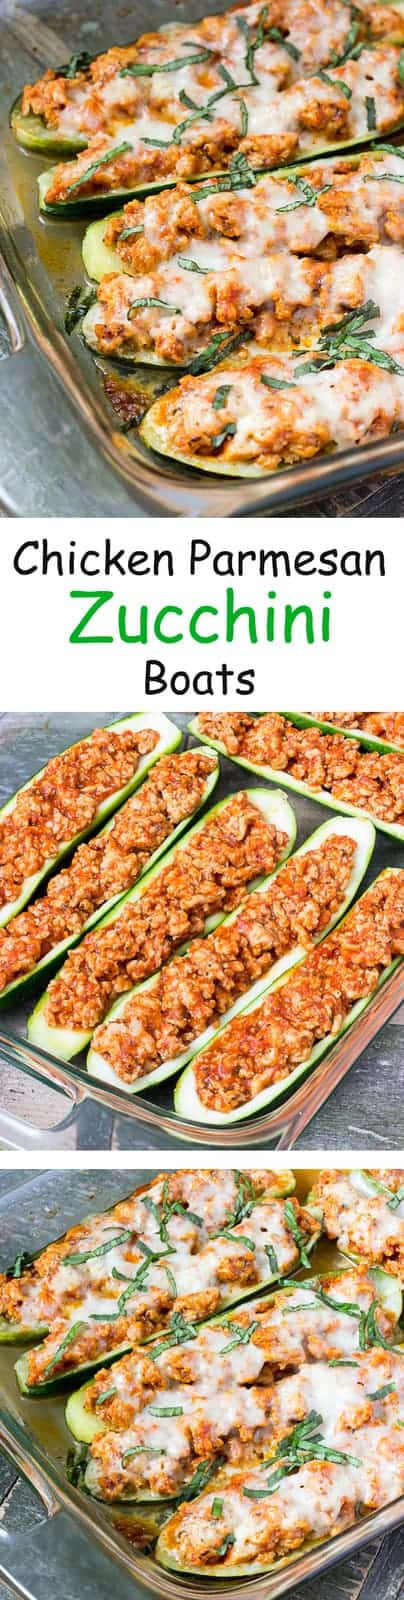 Chicken Parmesan Zucchini Boats